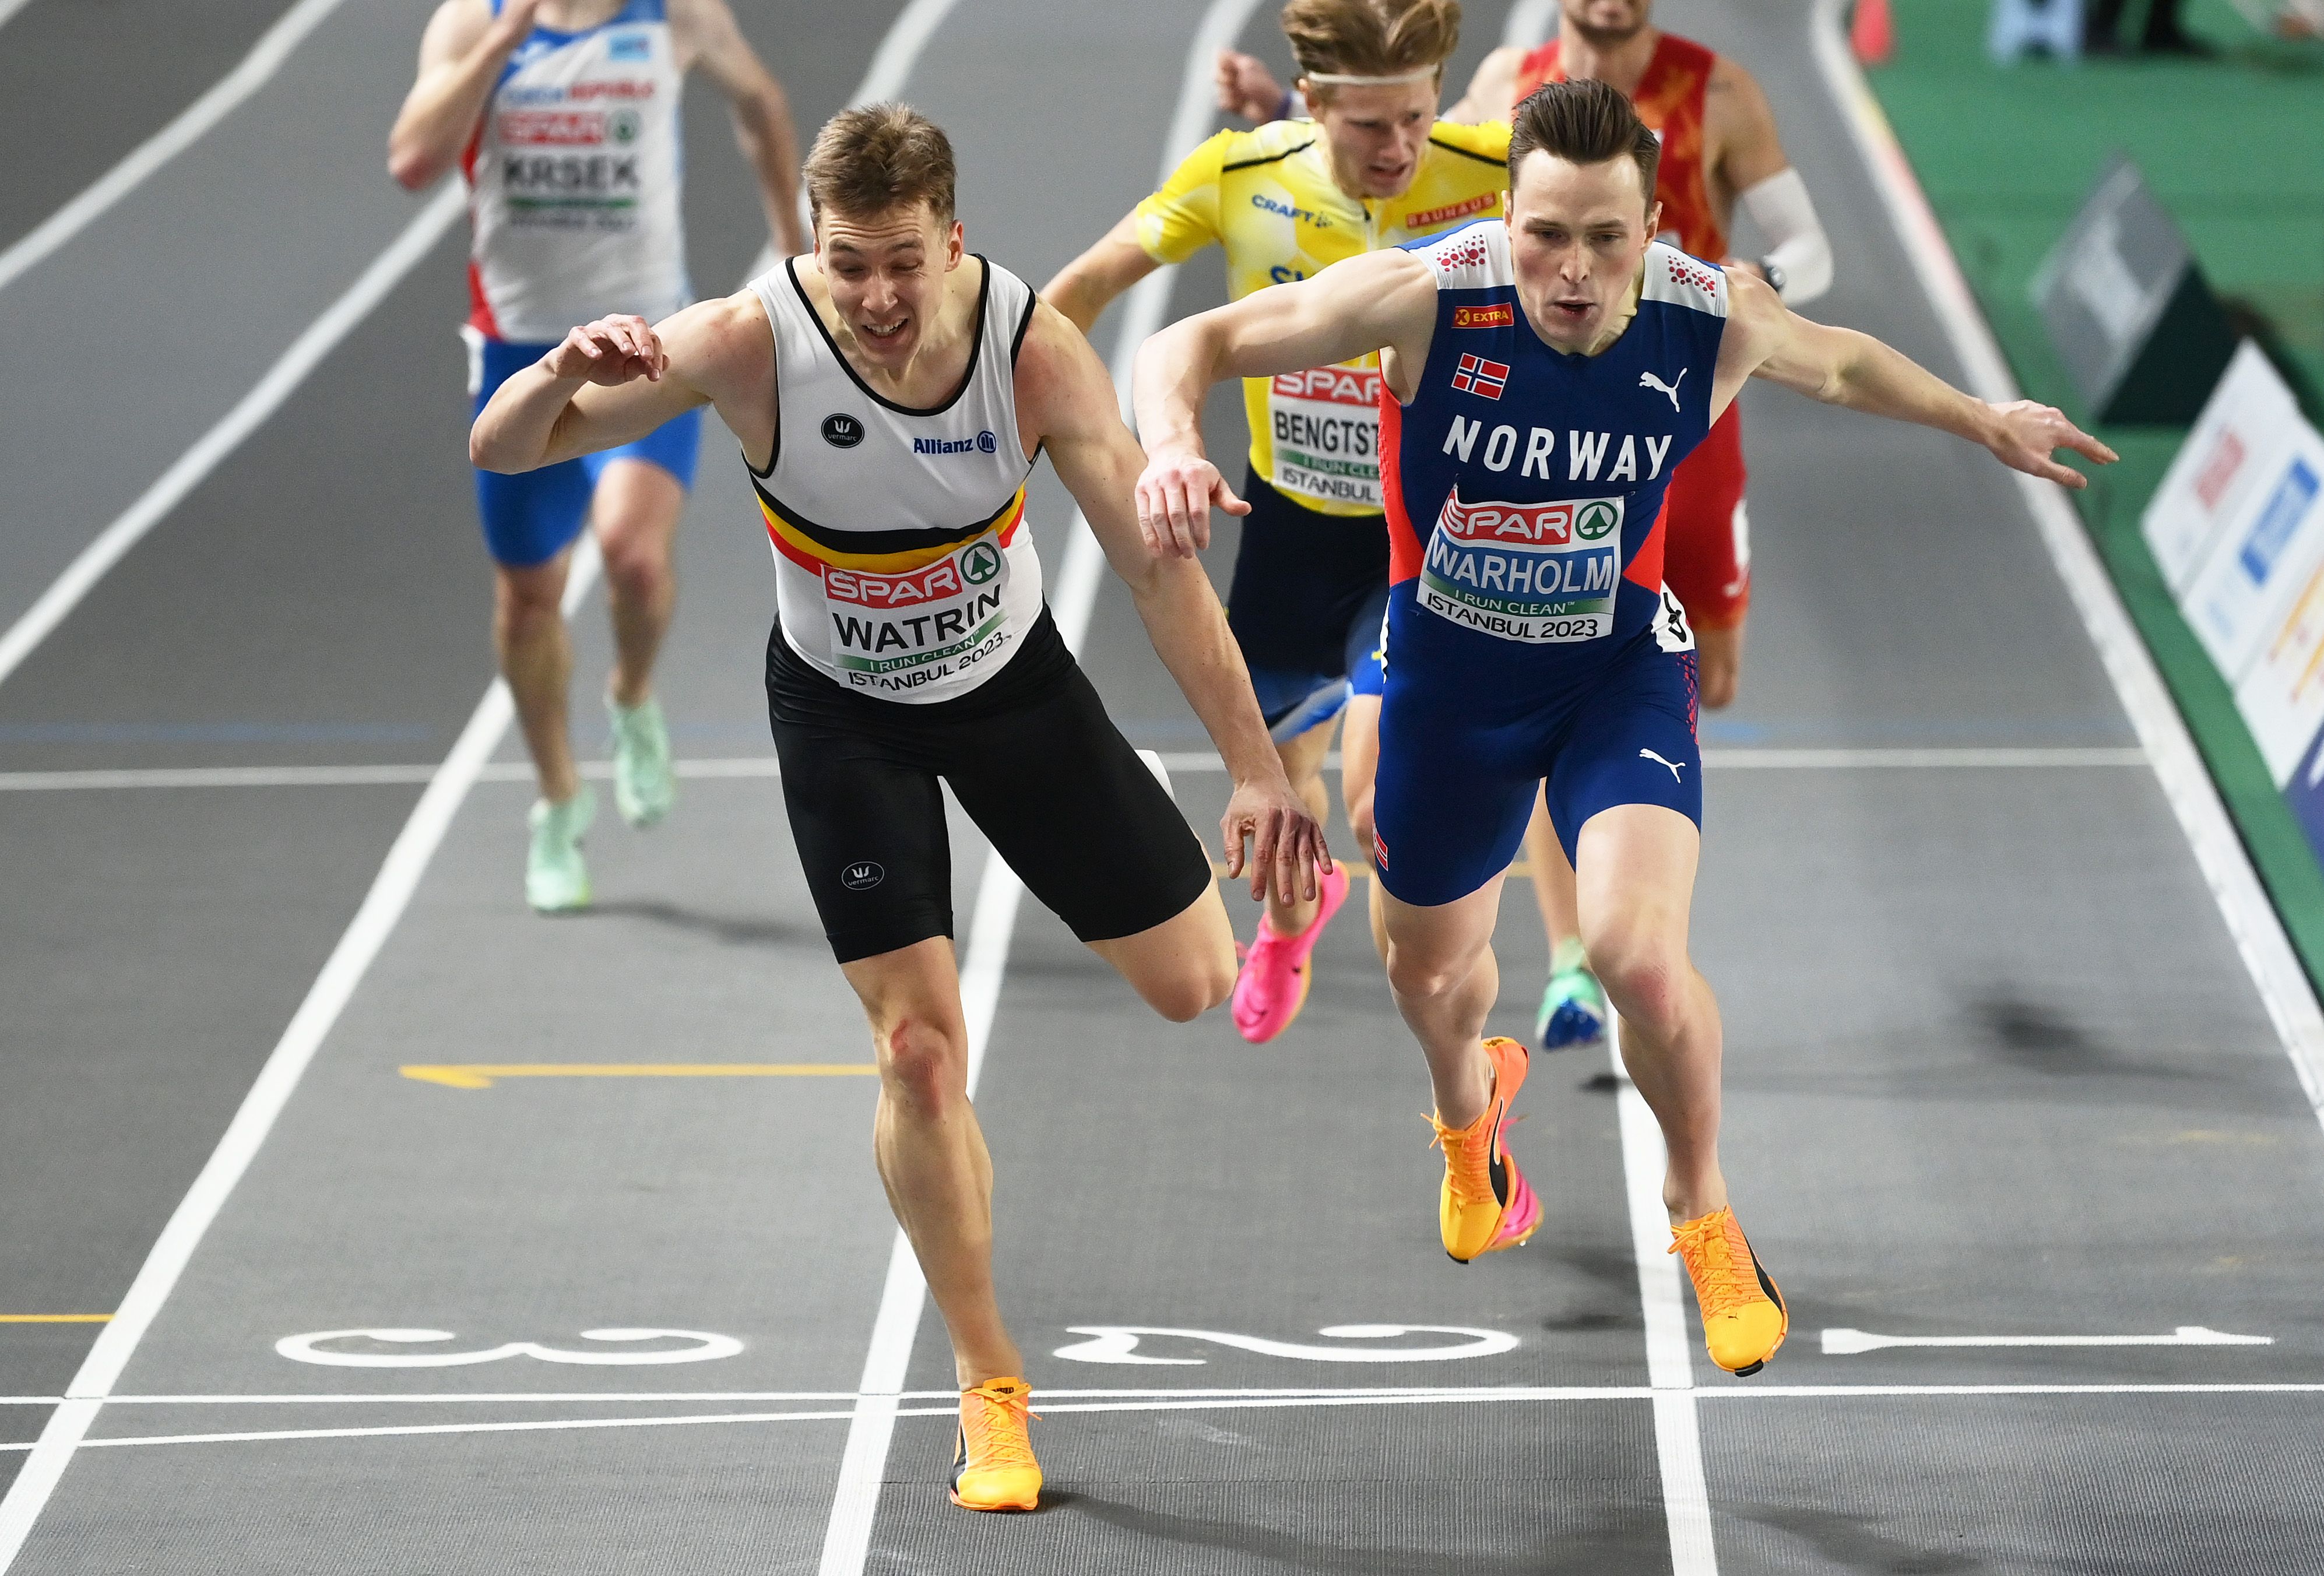 Karsten Warholm pips Julien Watrin to the European indoor 400m title in Istanbul